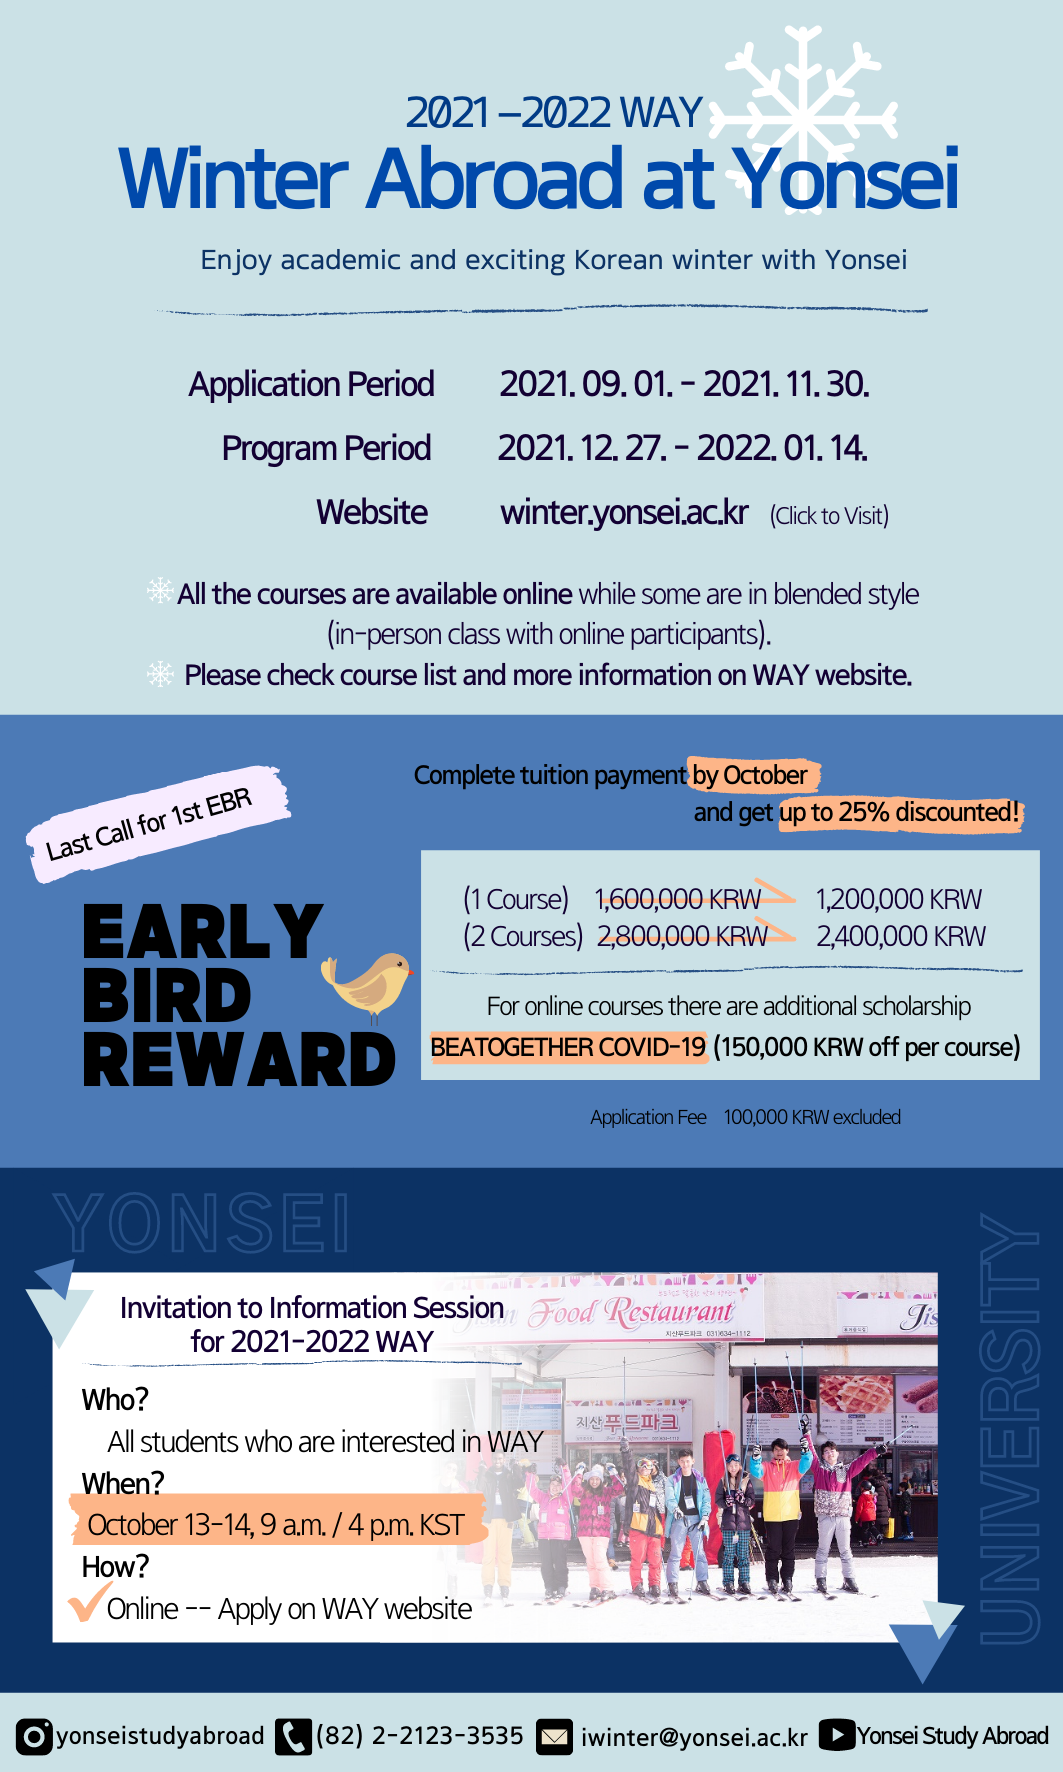 [Yonsei University] 2021-2022 Winter Abroad at Yonsei (1st Early bird by October)